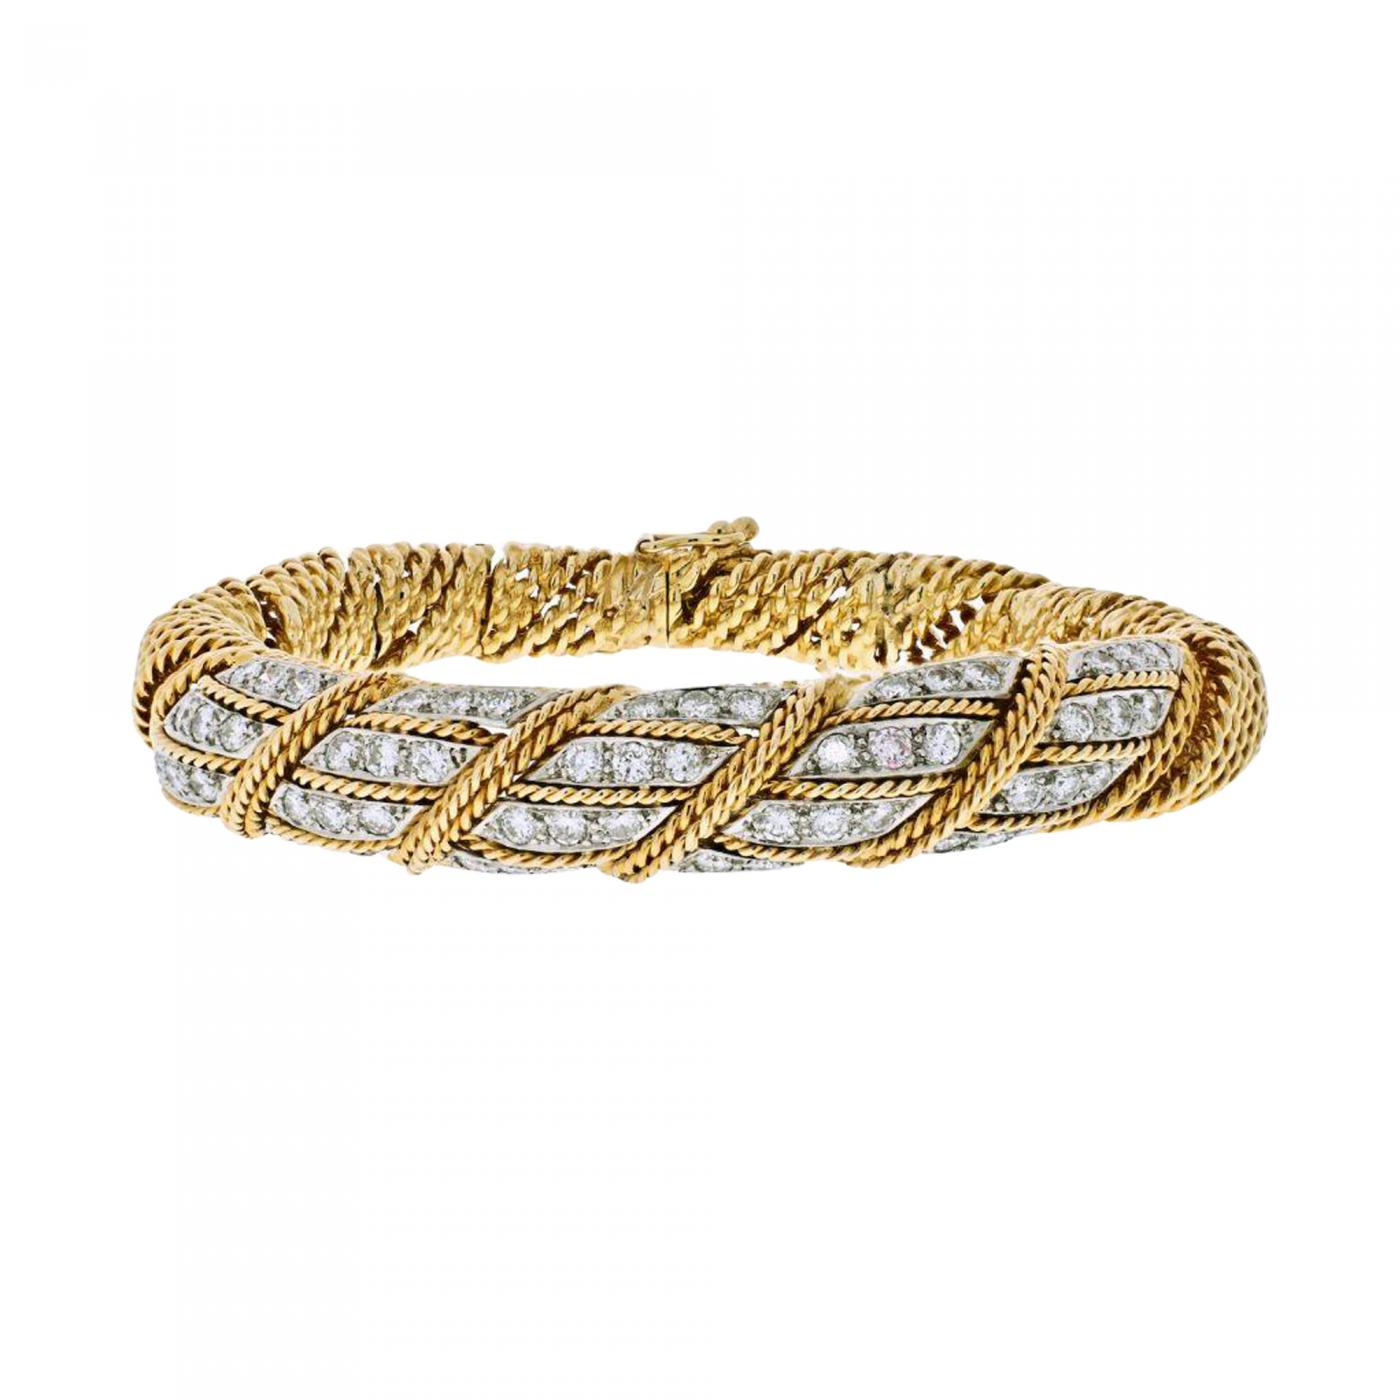 Tiffany & Co. Authentic 18k Yellow Gold and Diamond Hinged Bangle